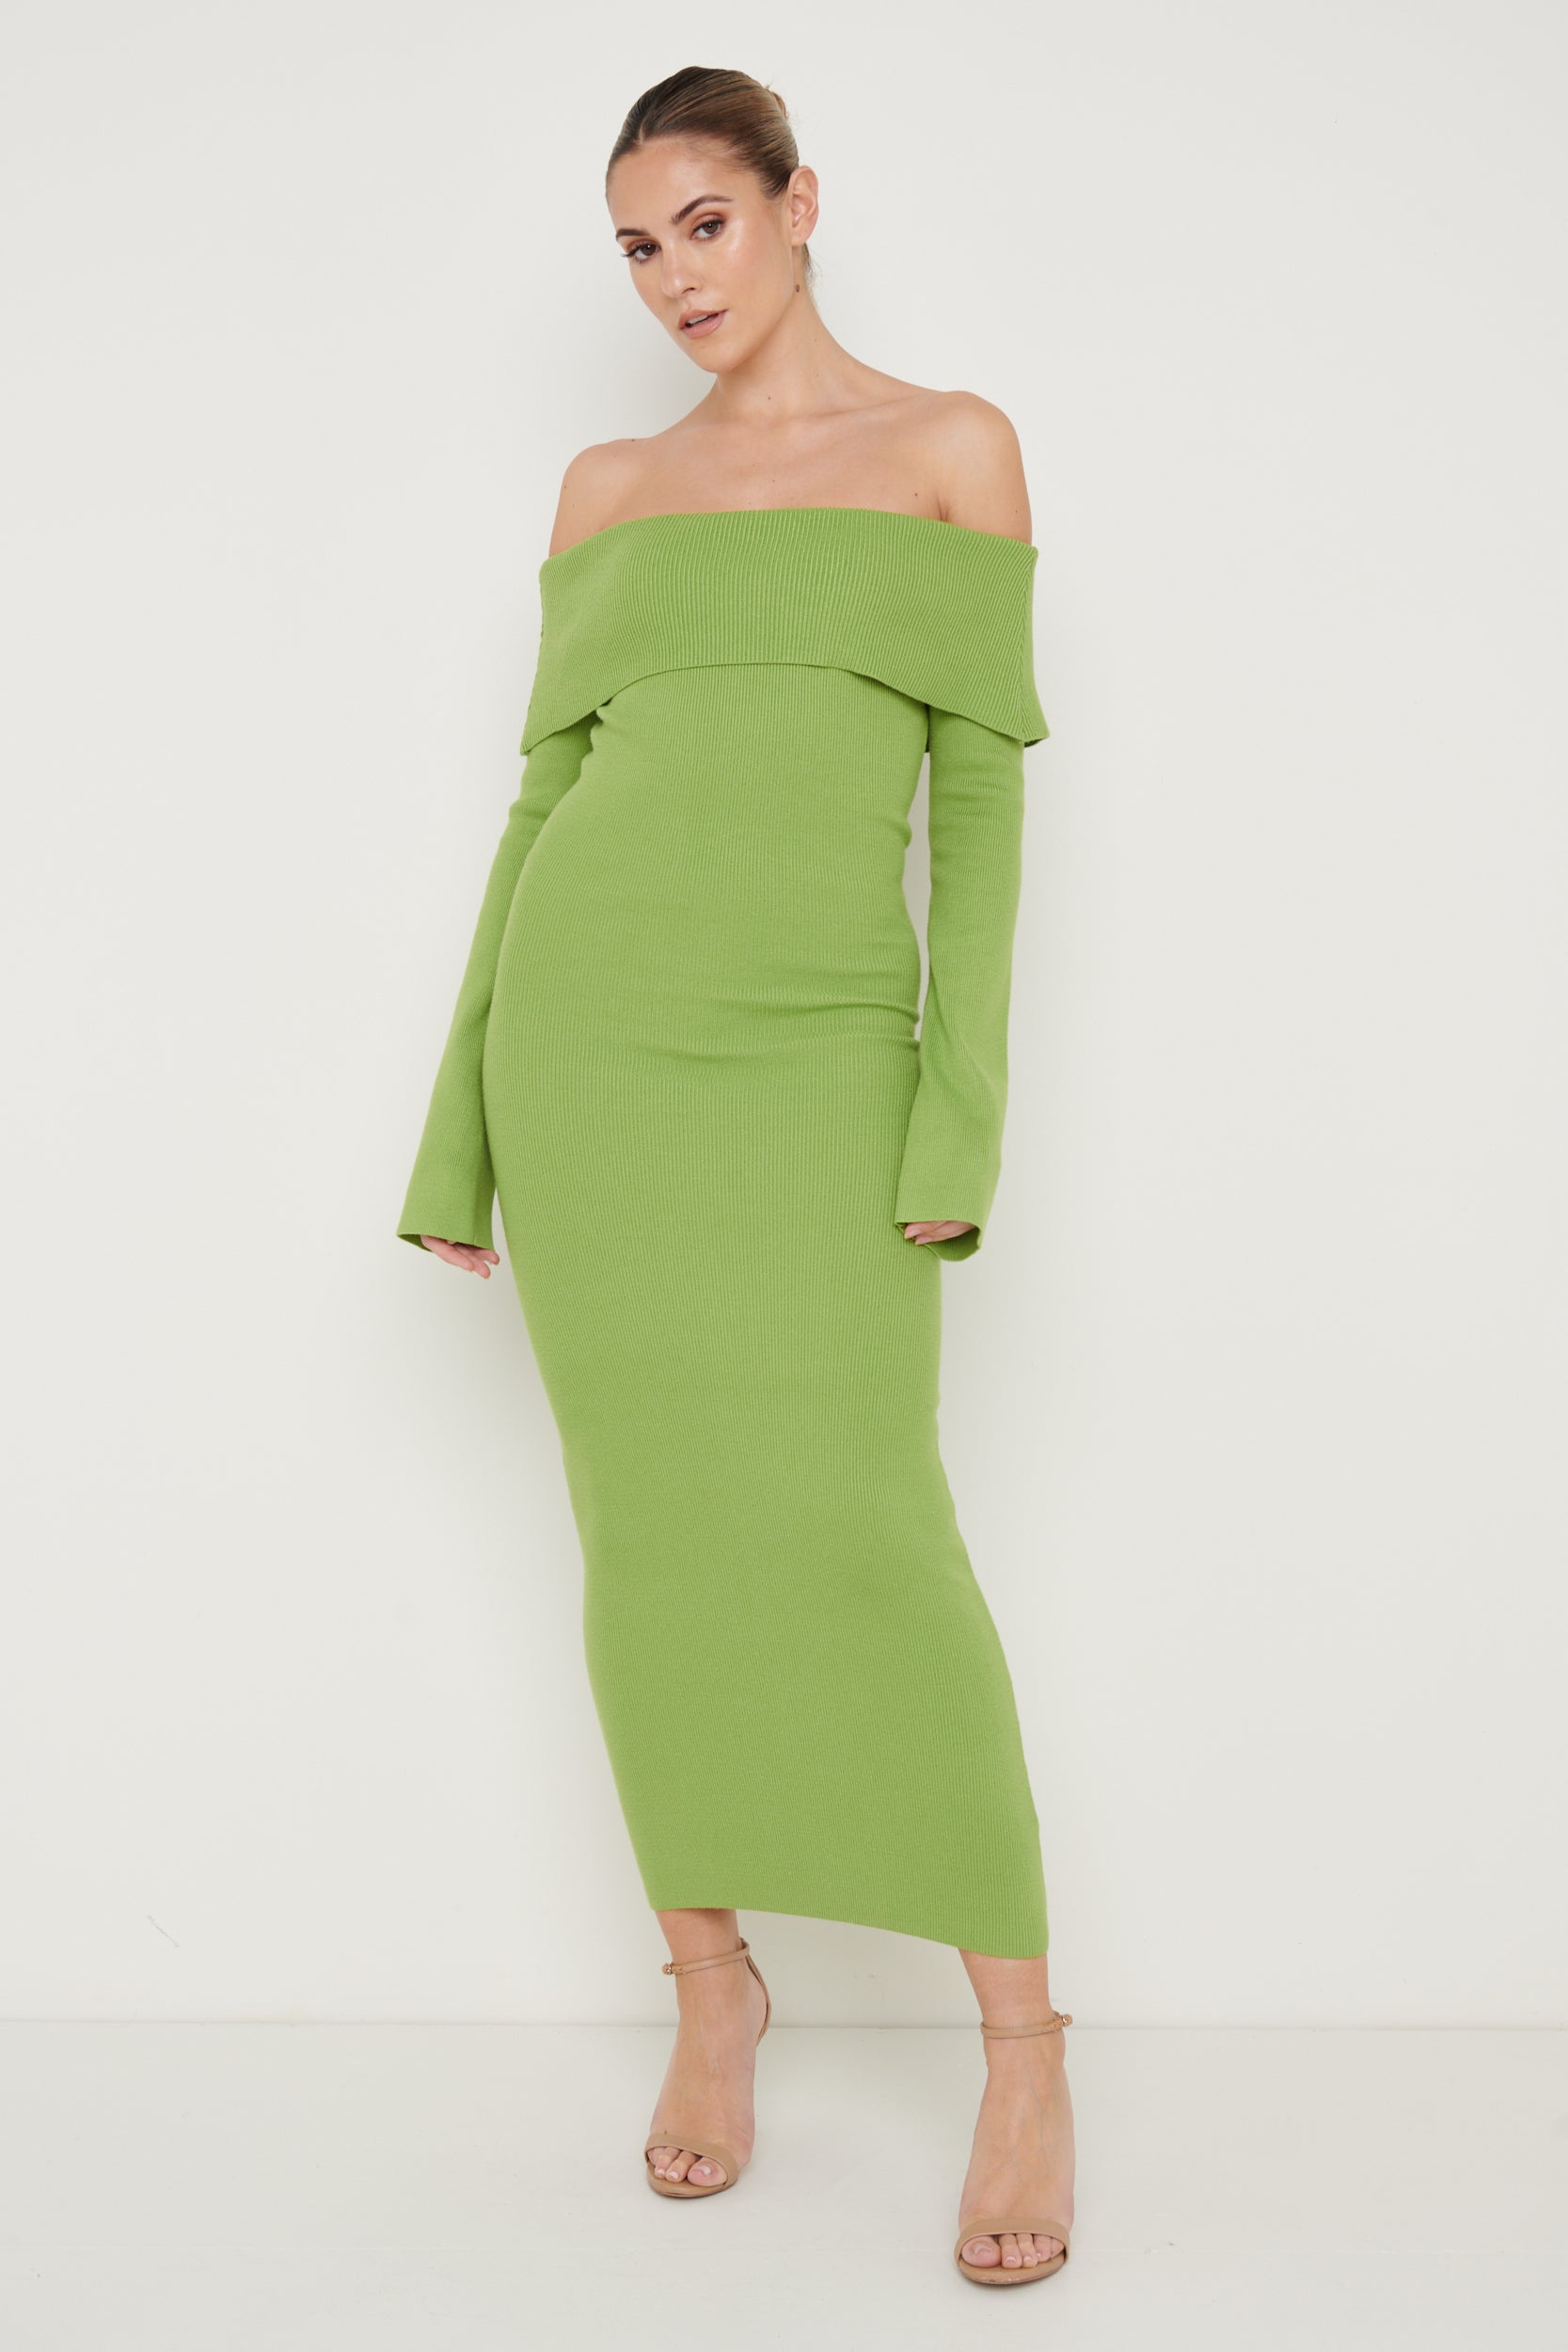 Soreya Bardot Knit Dress - Green